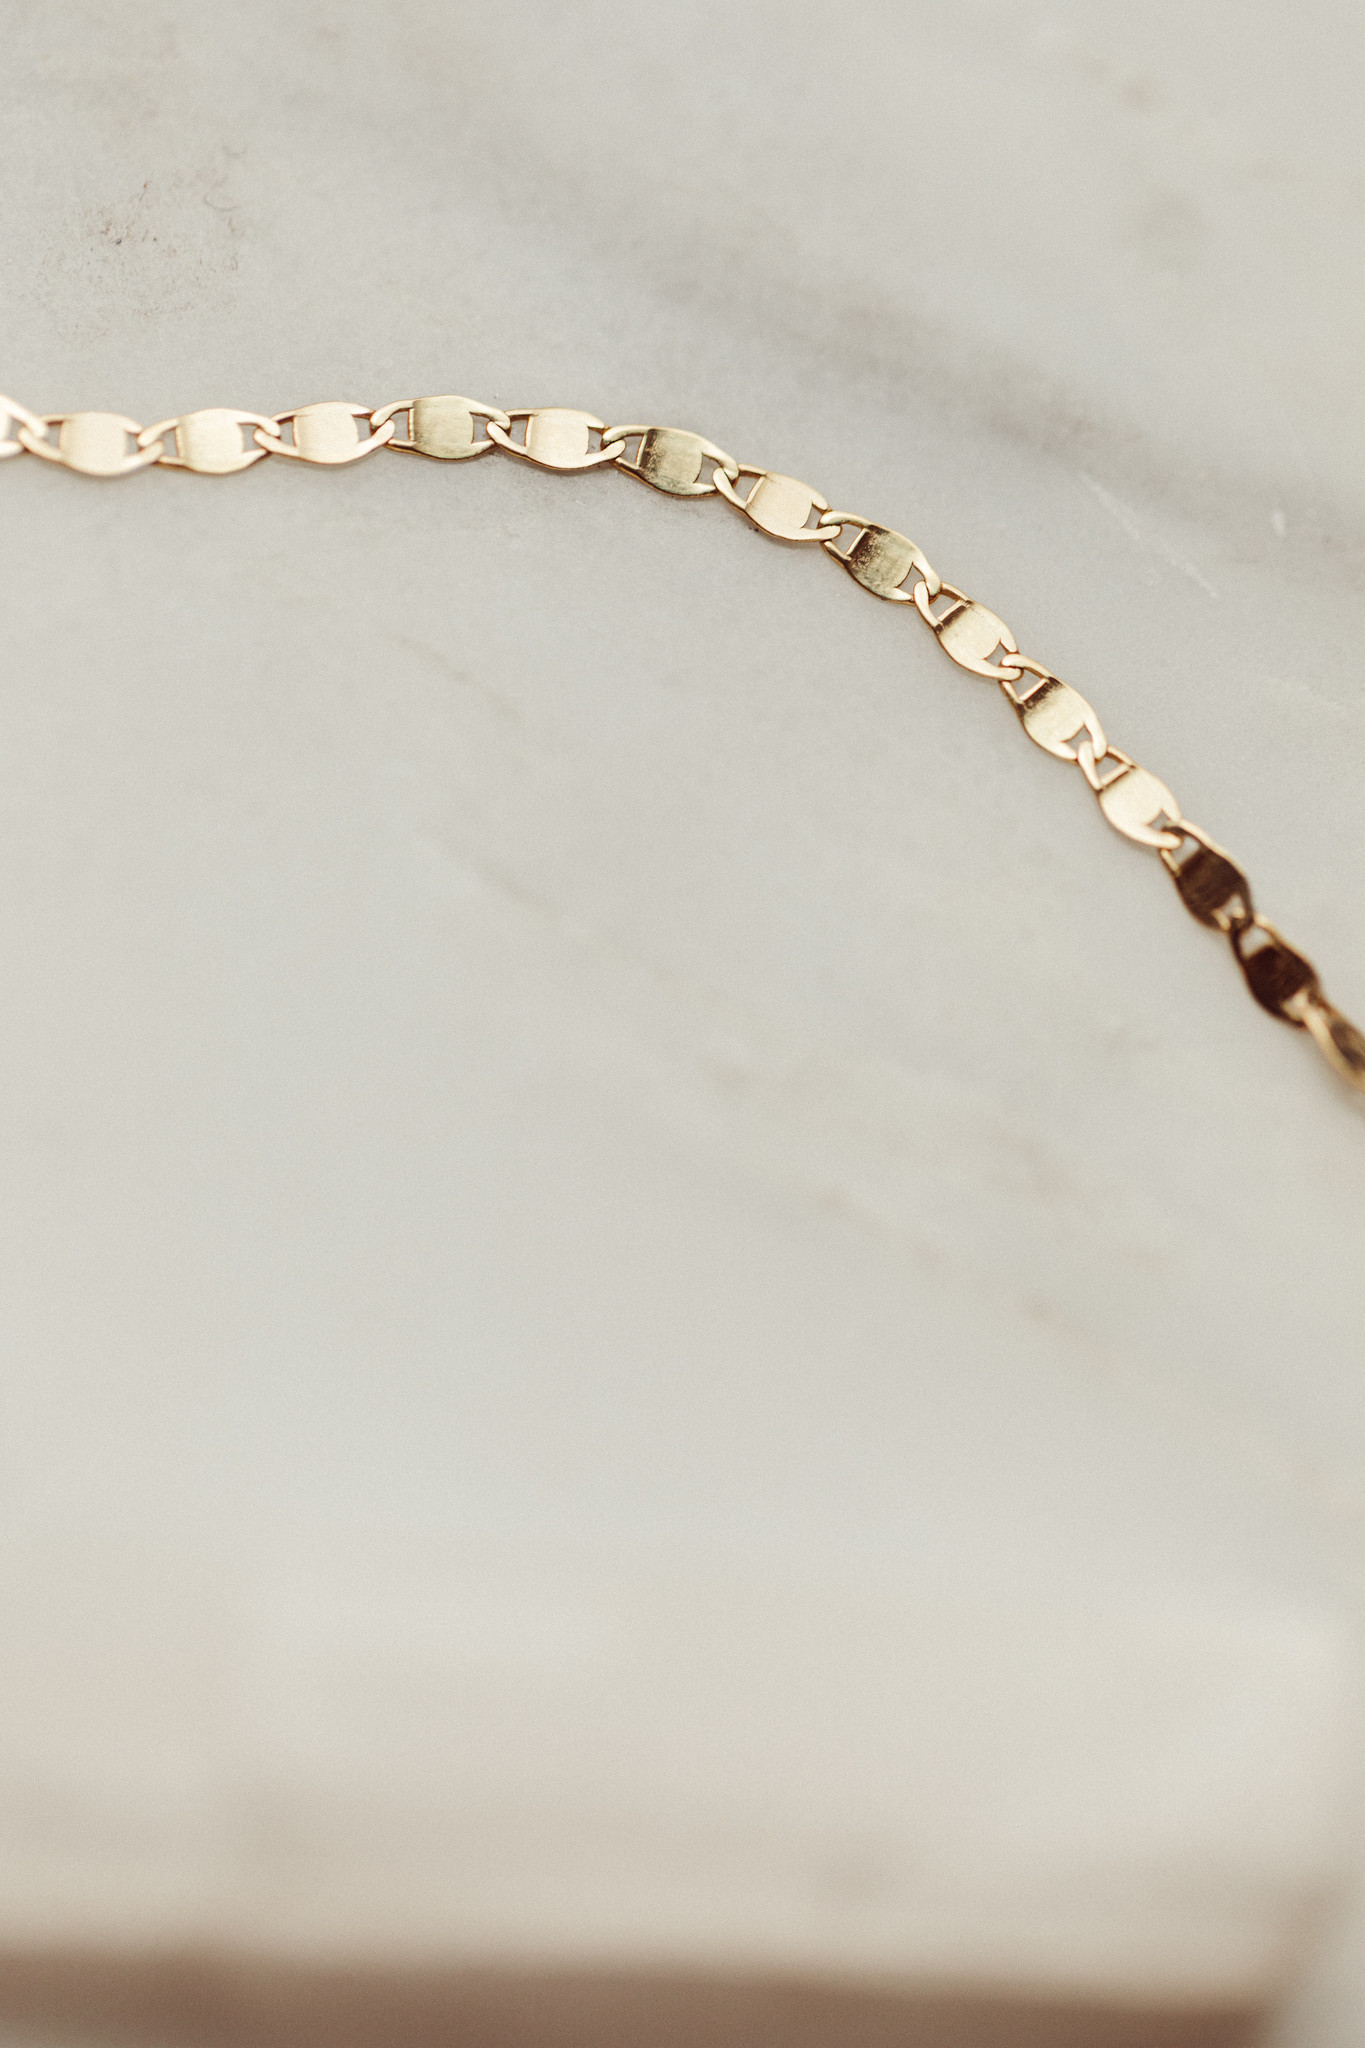 Valentino Chain Necklace - Sarah O.